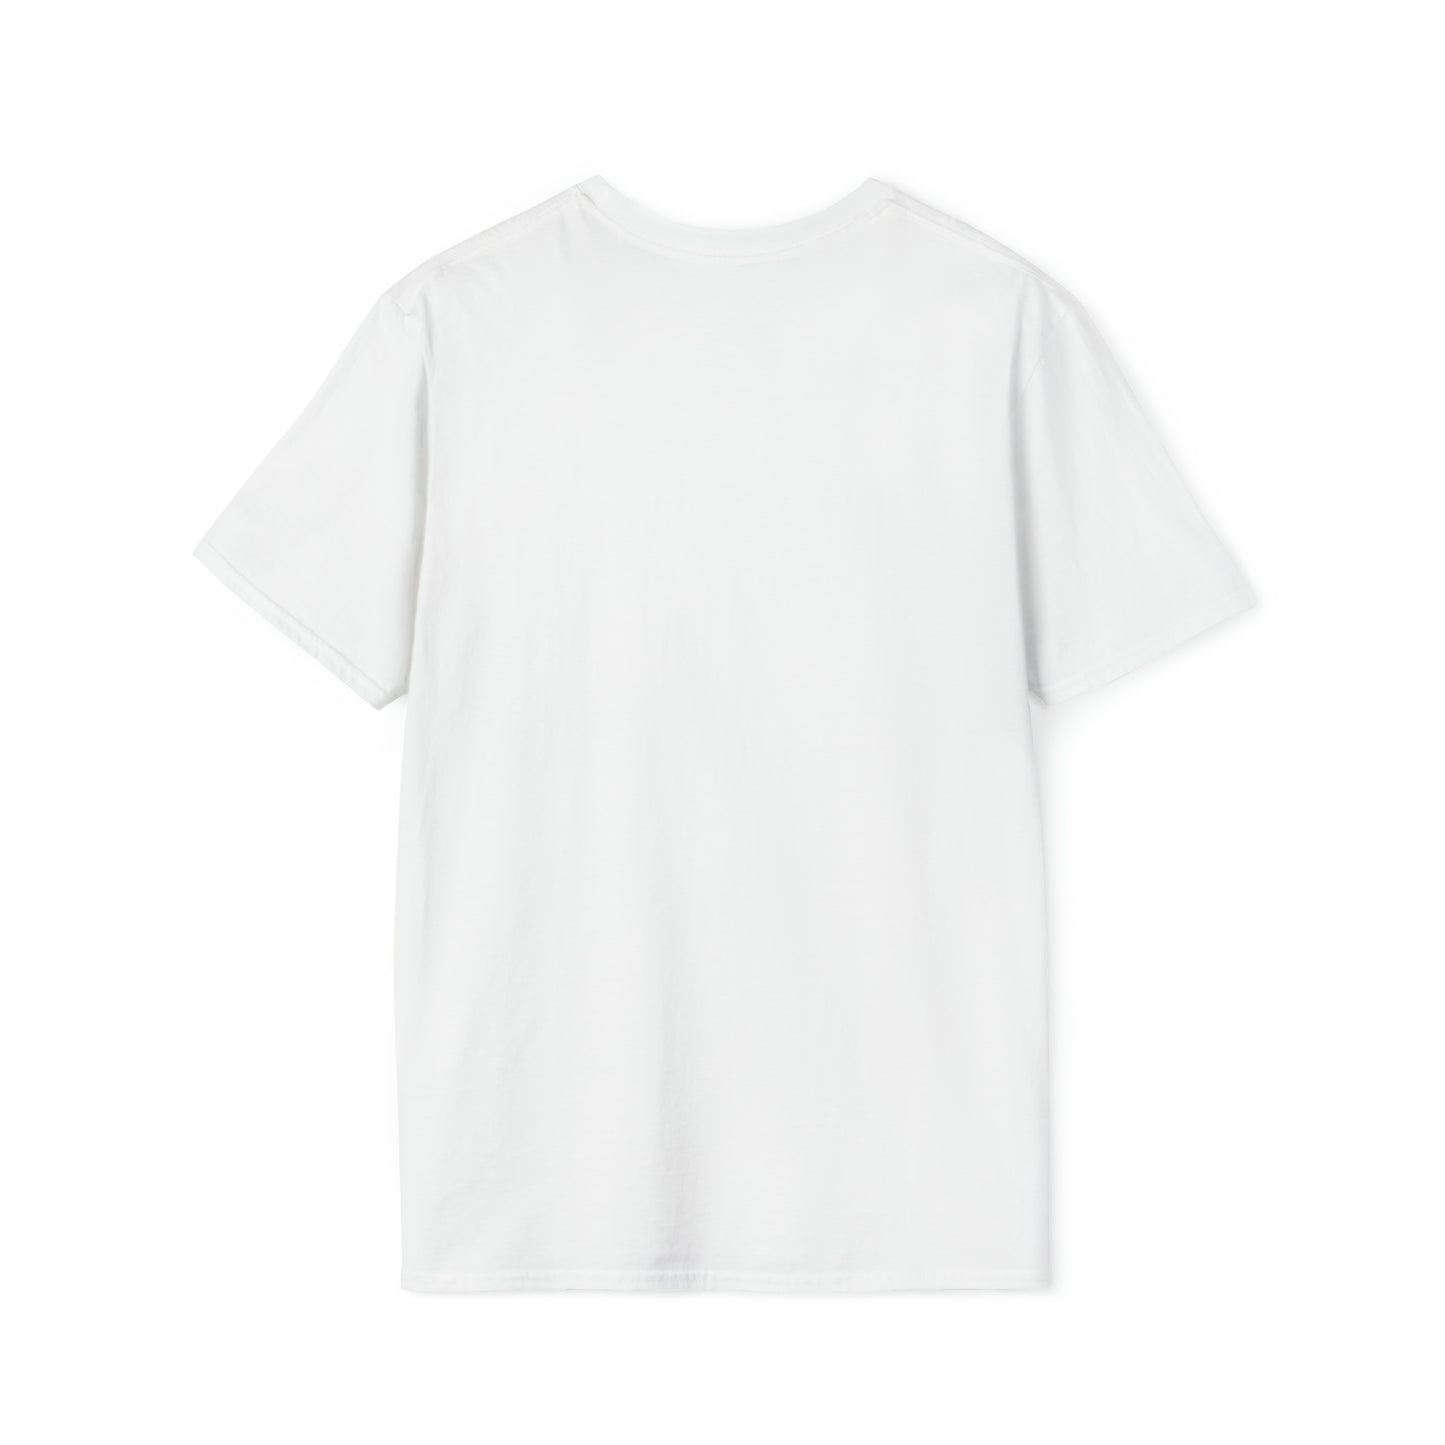 Happy New You Unisex Softstyle T-Shirt